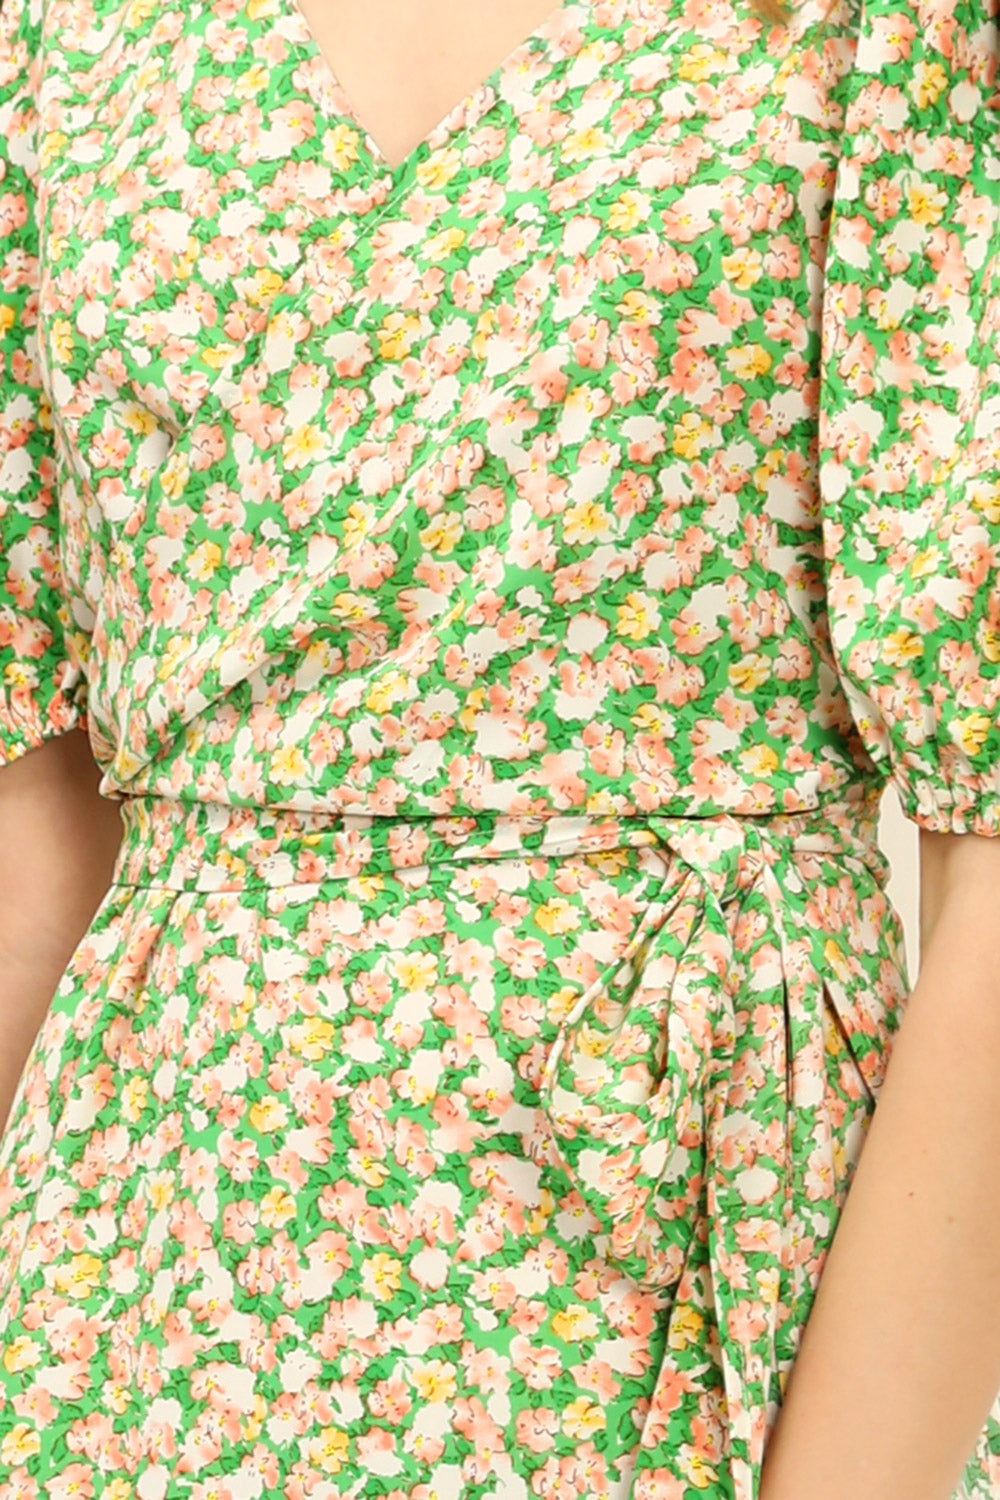 storets.com Katy Faux Wrap Dress In Floral